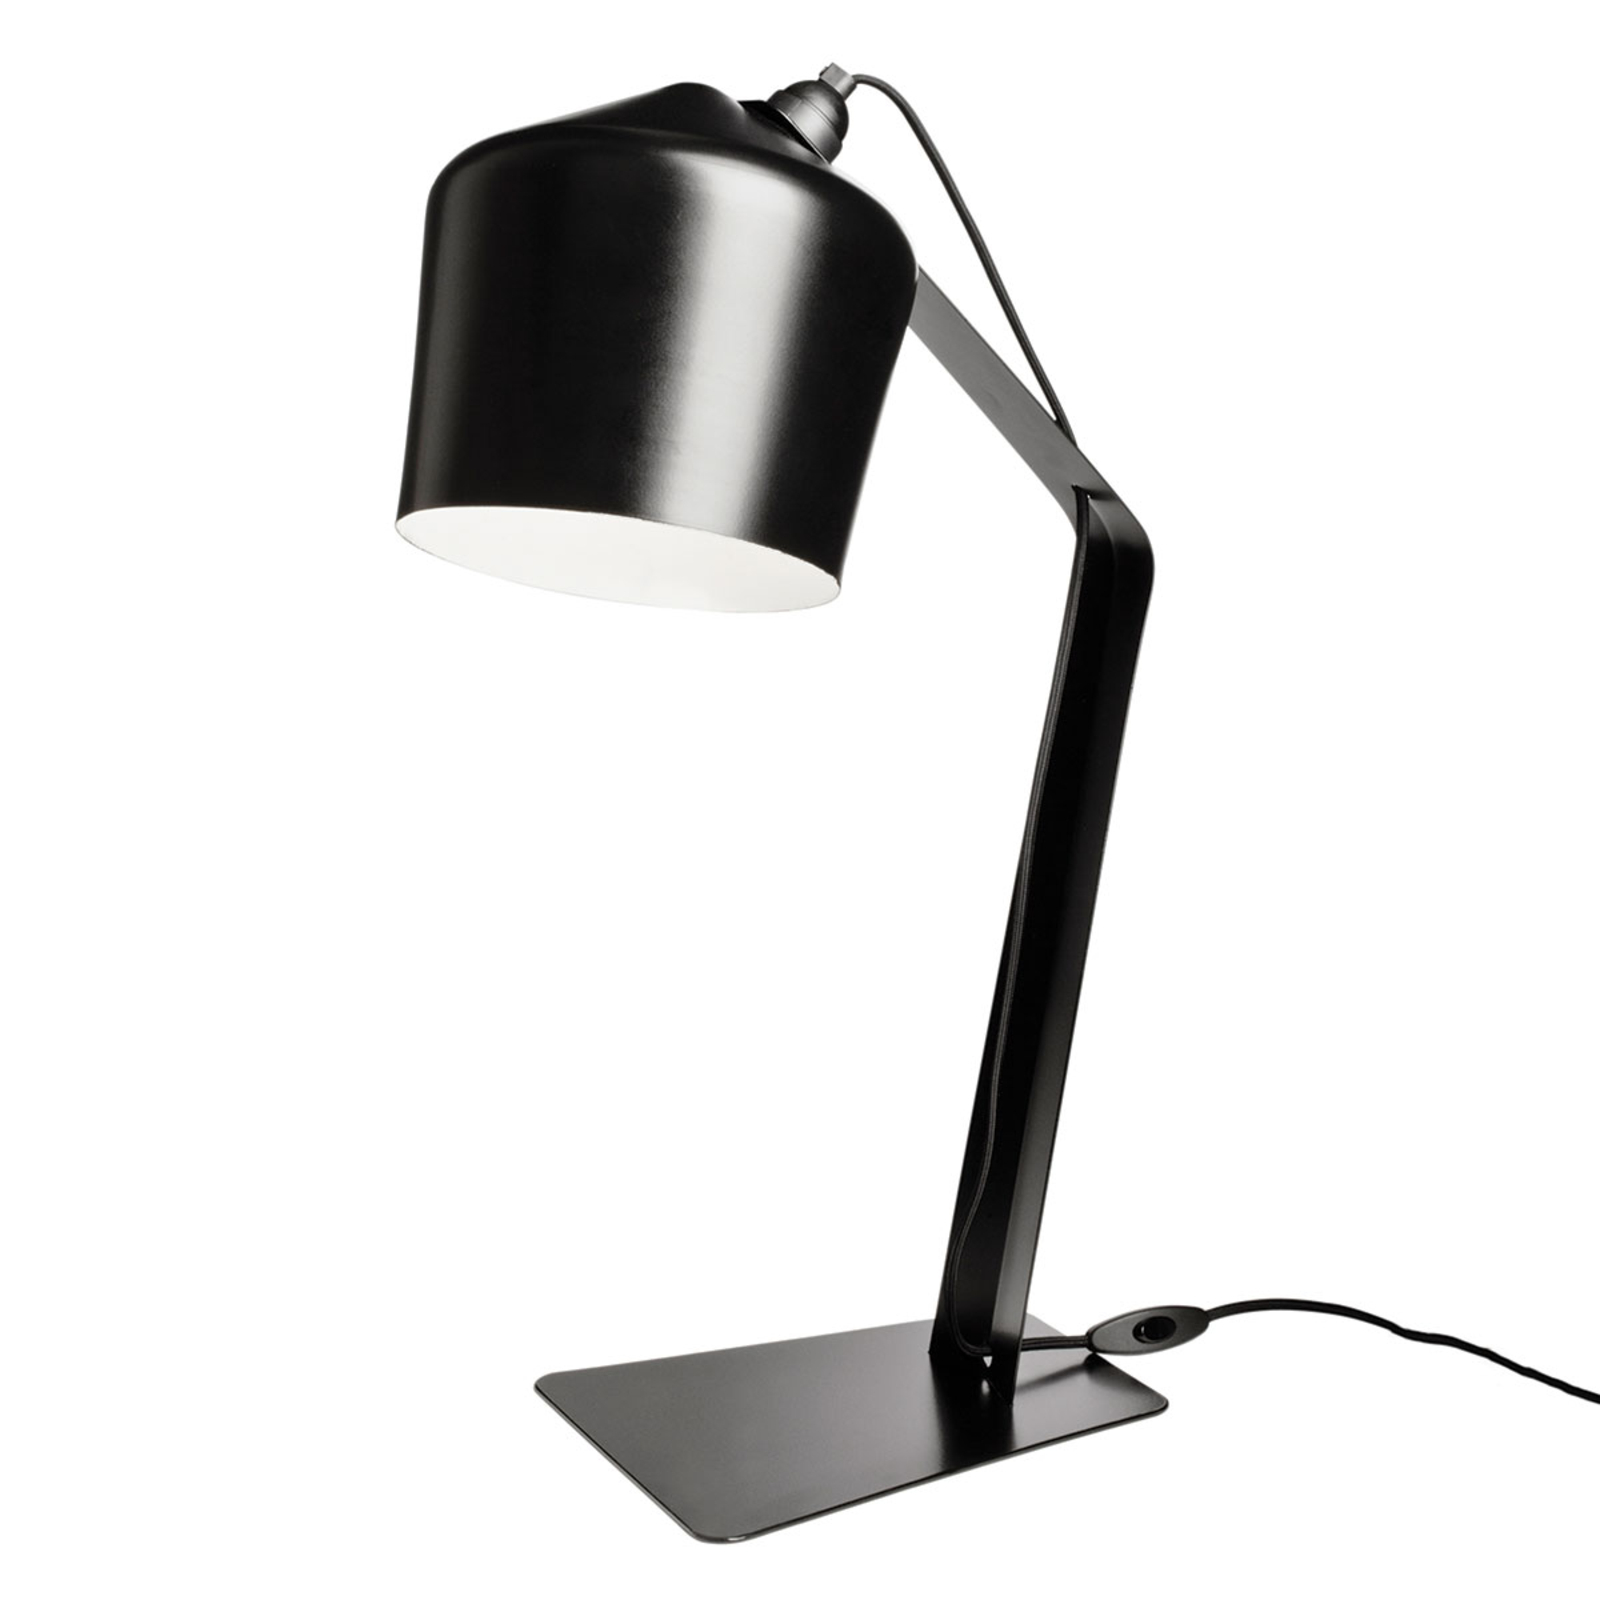 Innolux Pasila lampe à poser design noir